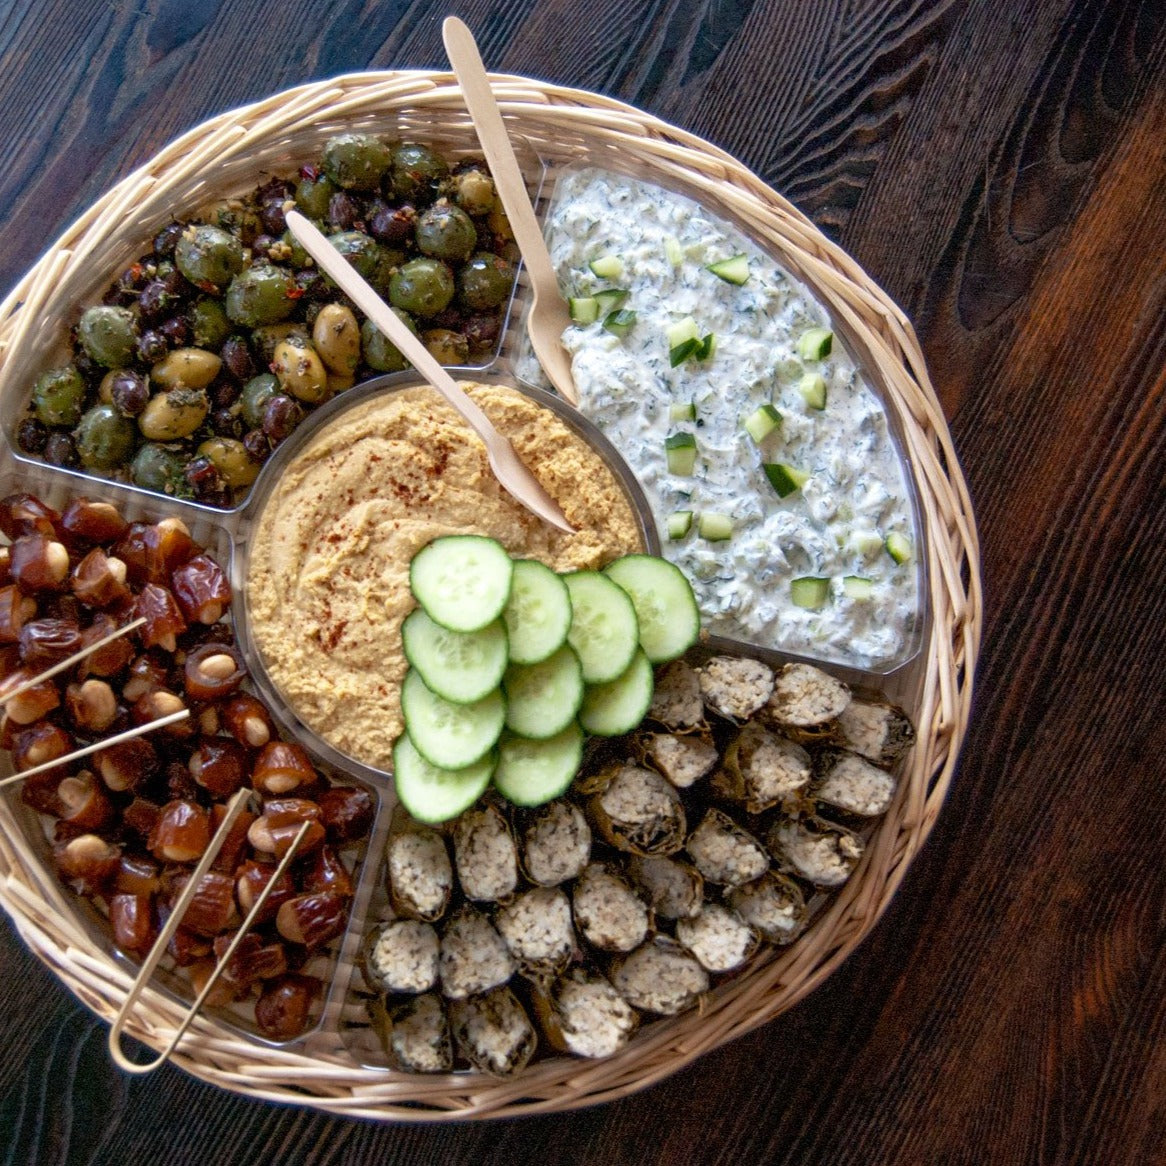 Platter with dolmas, hummus, tzatziki, olives, and almond stuffed dates